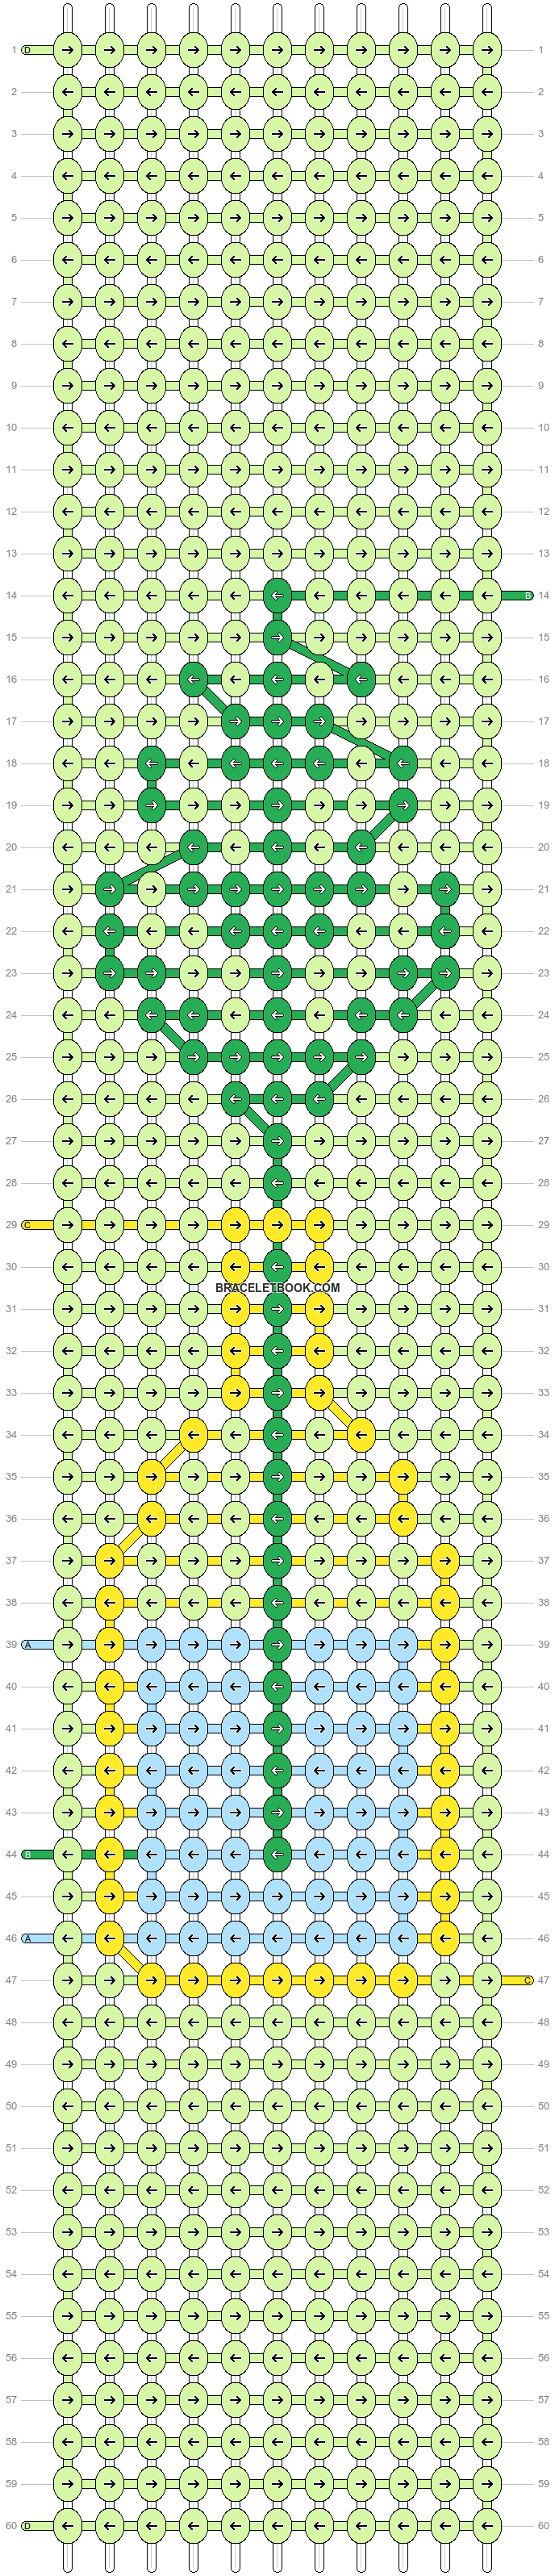 Alpha pattern #38260 variation #46243 pattern